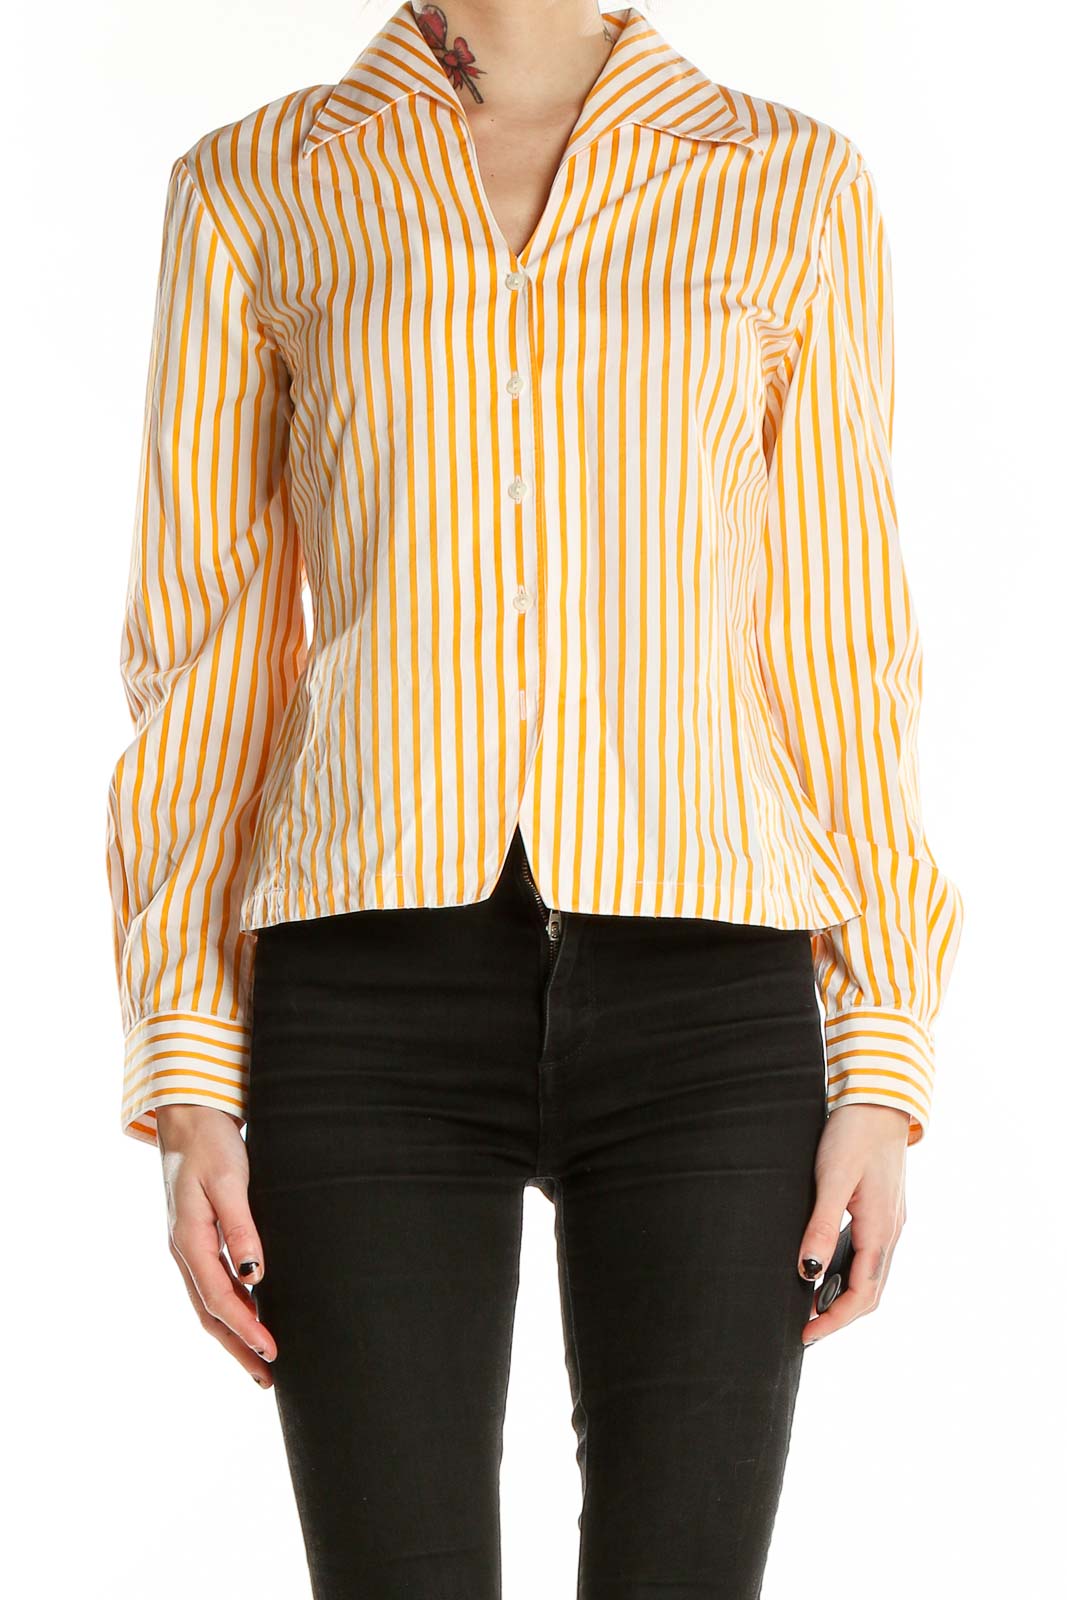 Yellow Stripe Shirt Front